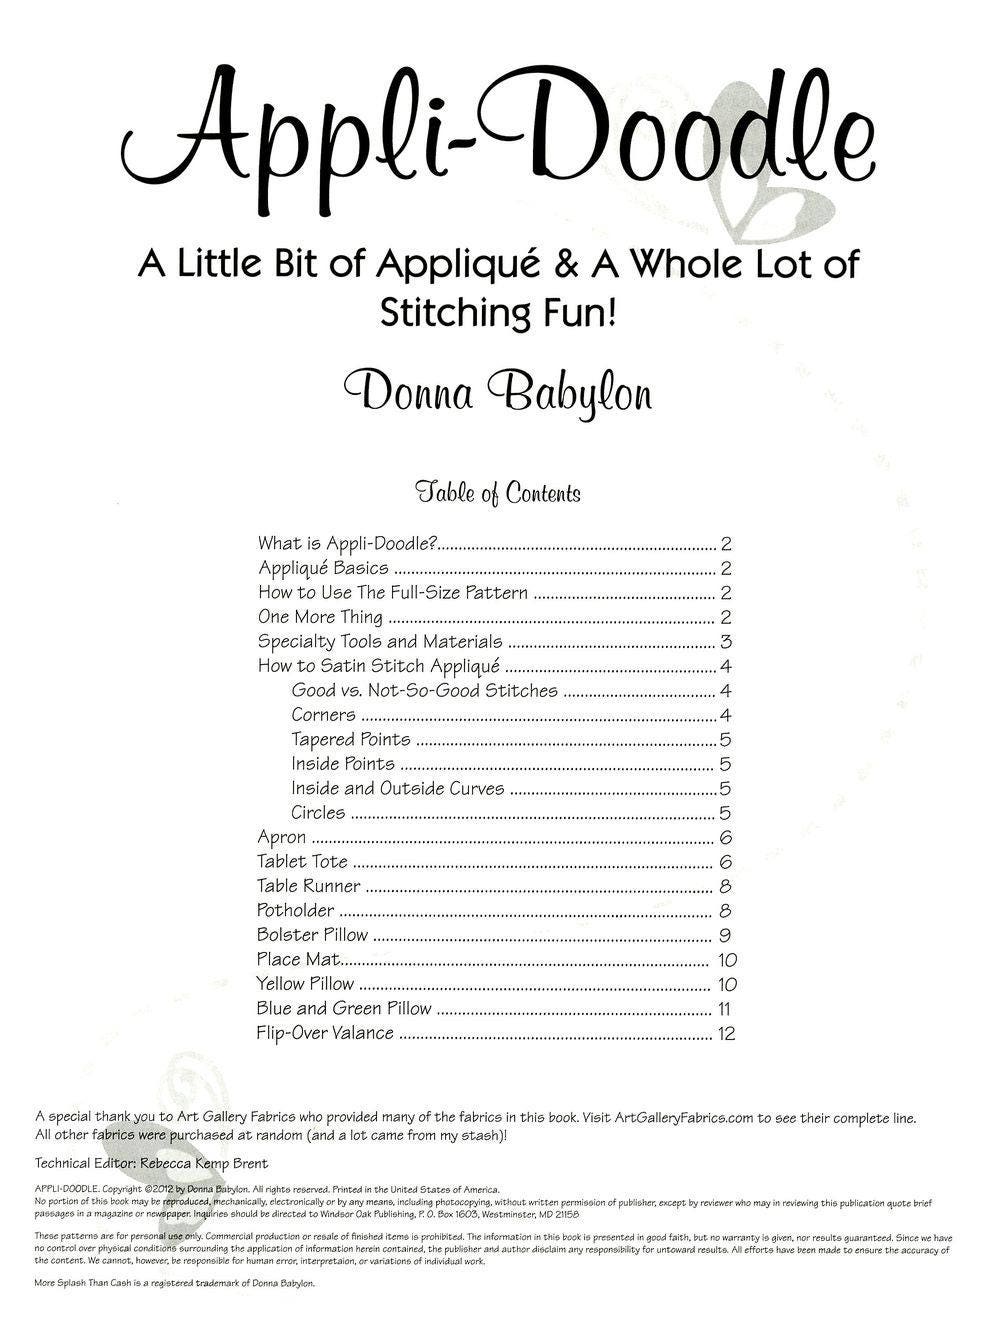 Appli-Doodle Applique Pattern Book by Donna Babylon